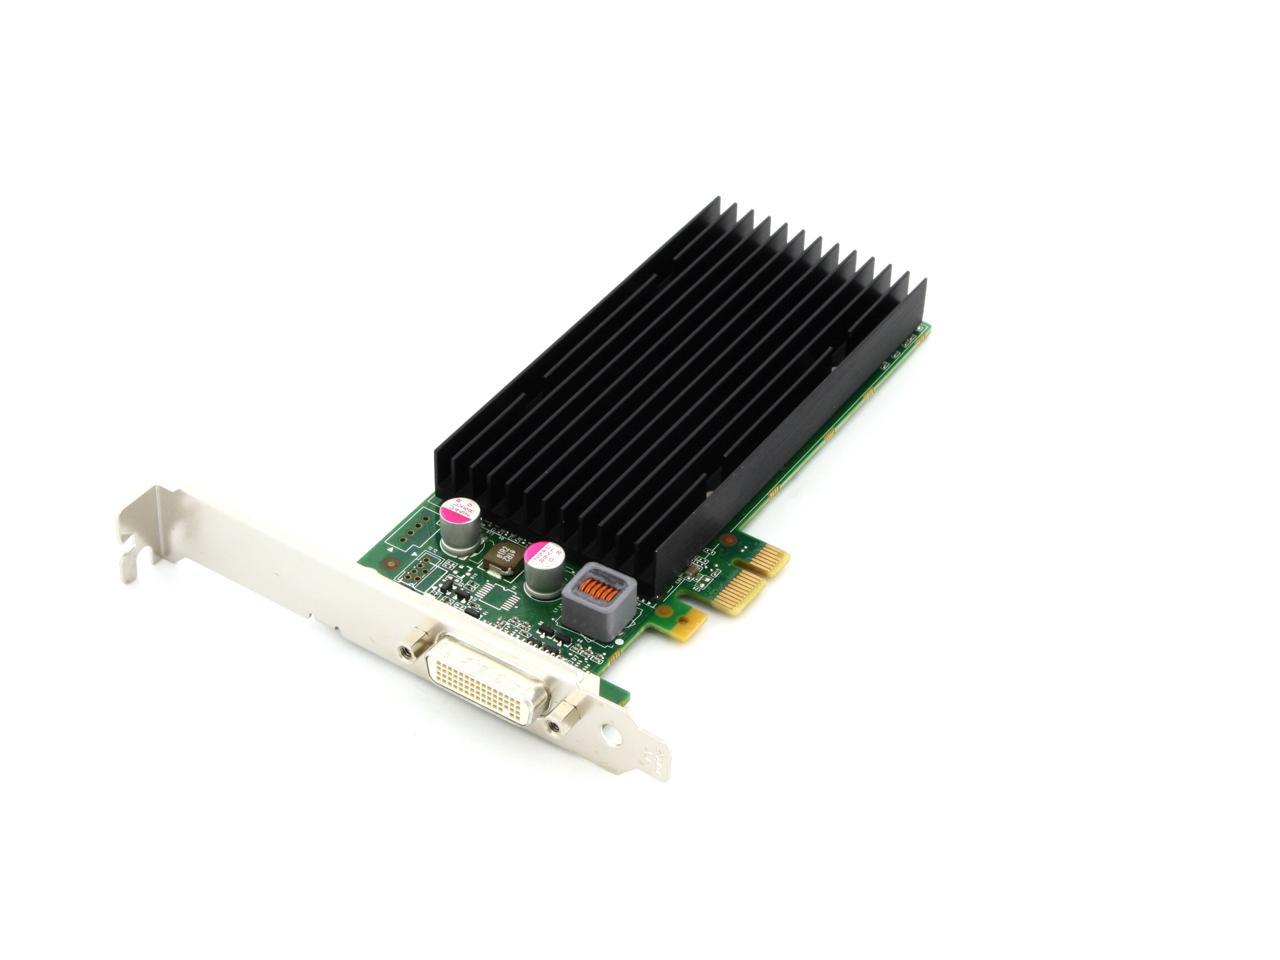 PNY NVS Quadro NVS 300 VCNVS300X1-PB 512MB DDR3 PCI Express x1 Low Profile  Workstation Video Card